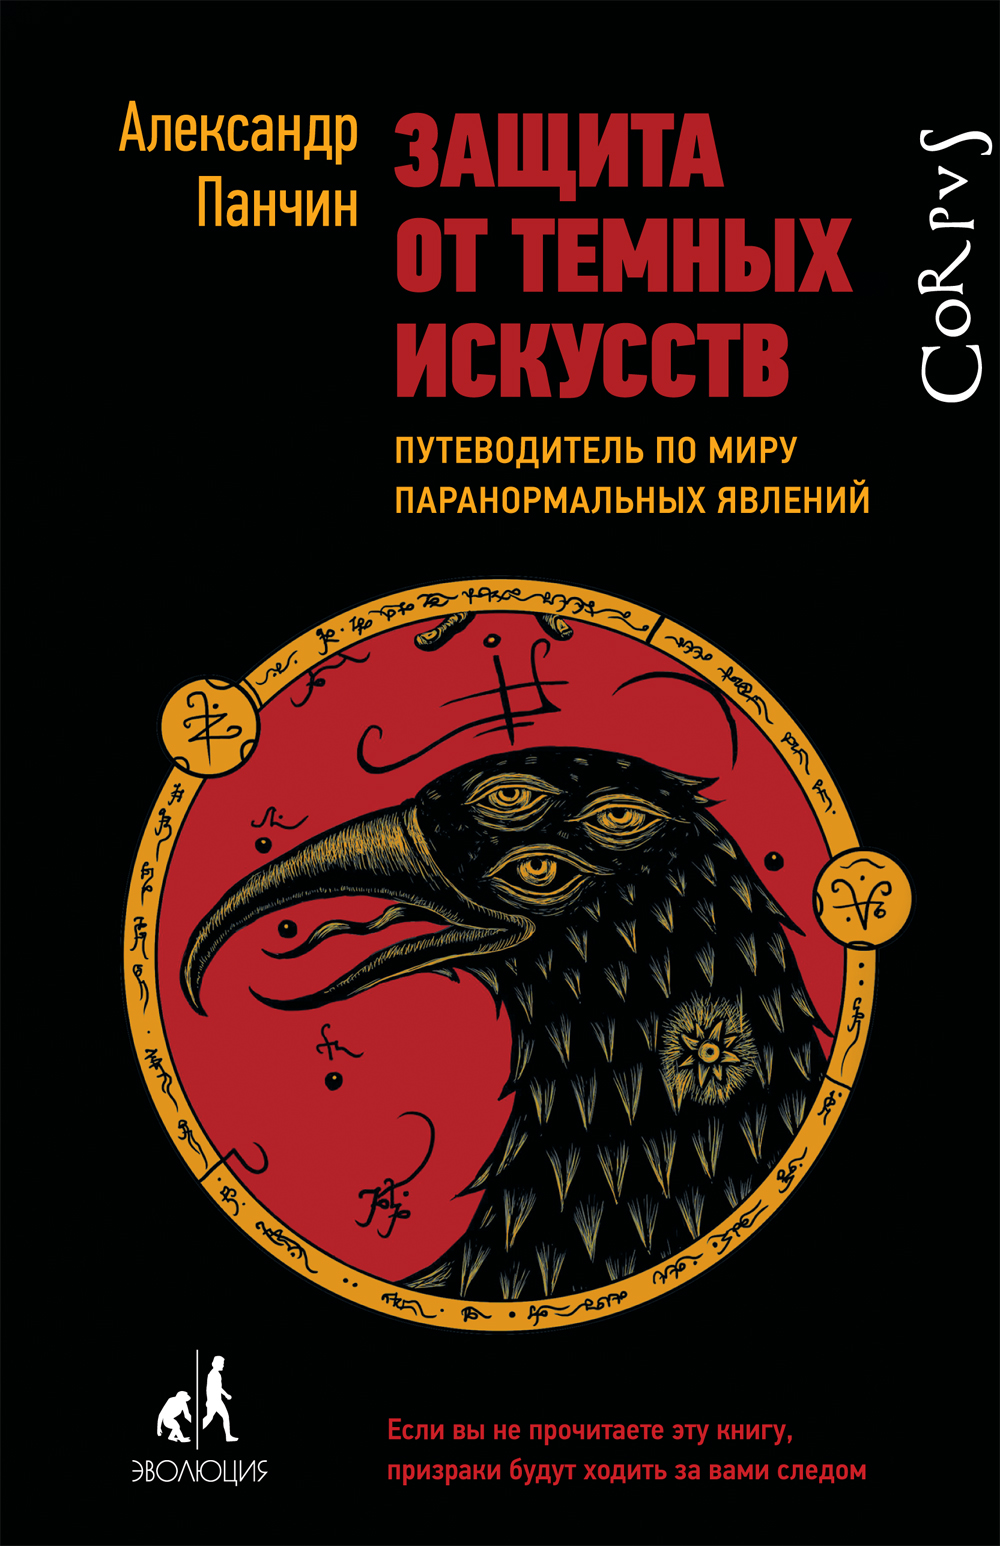 Александр Панчин: Защита от темных искусств (Hardcover, Russian language, 2018, Corpus)